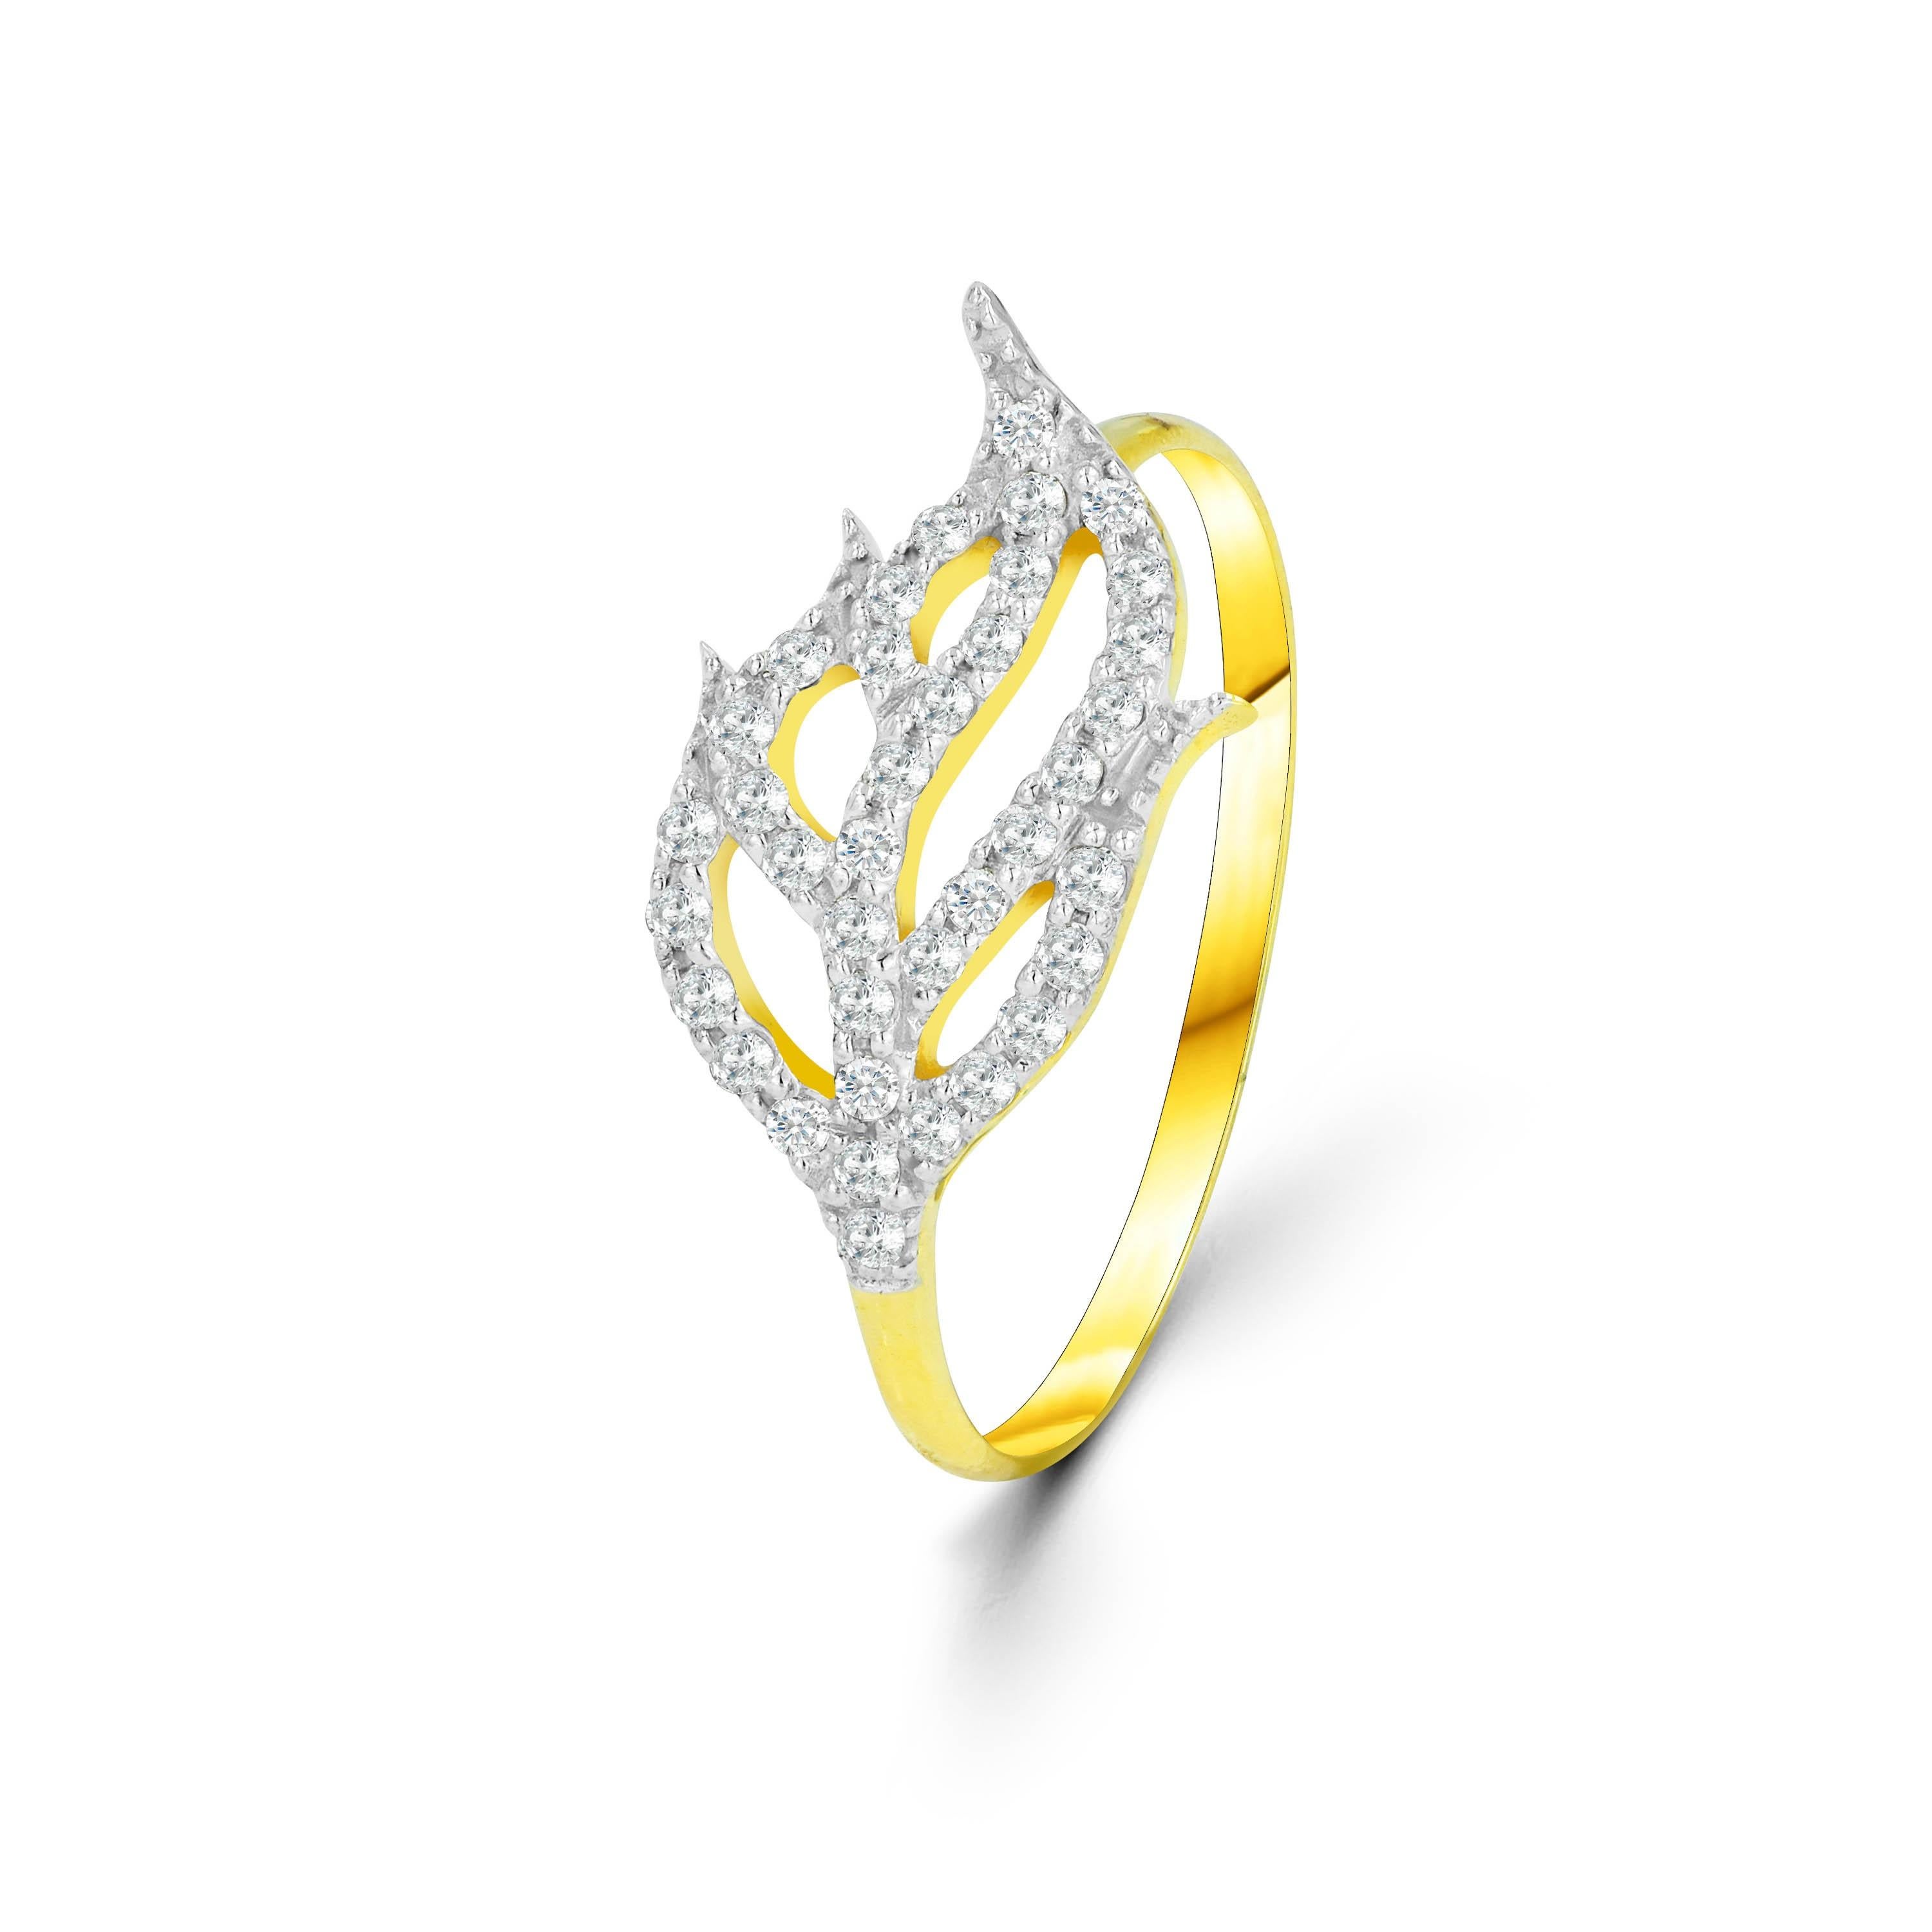 Im Angebot: 14K Gold 0,24 Karat Diamant-Blatt-Ring () 2